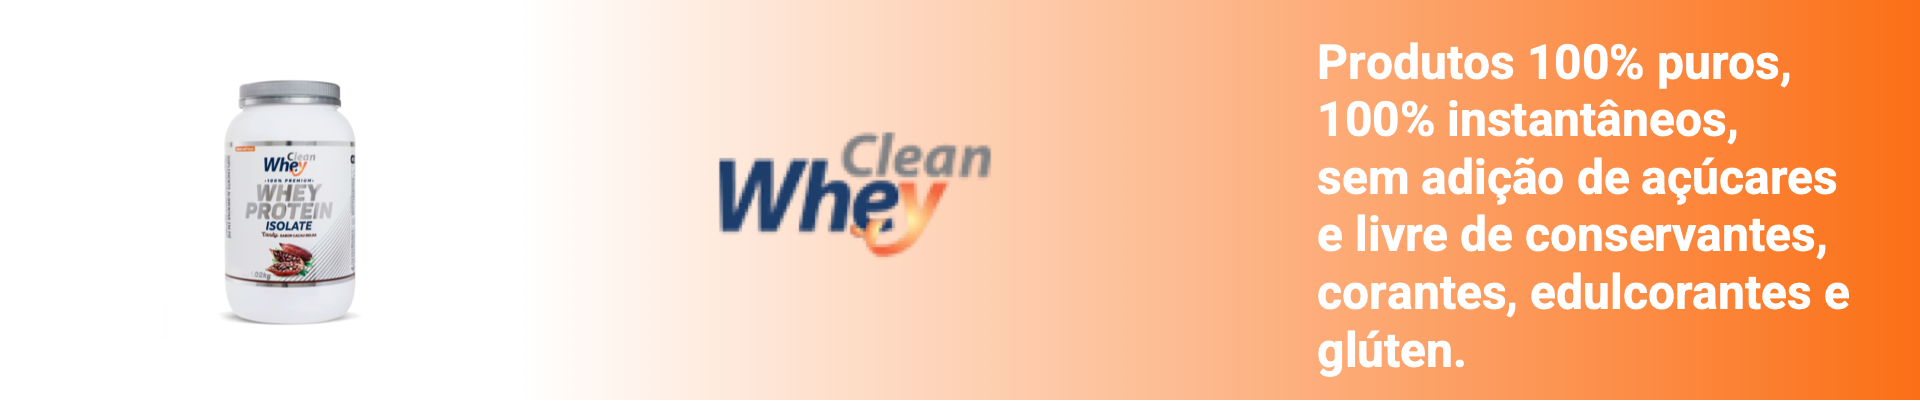 banner Clean Whey